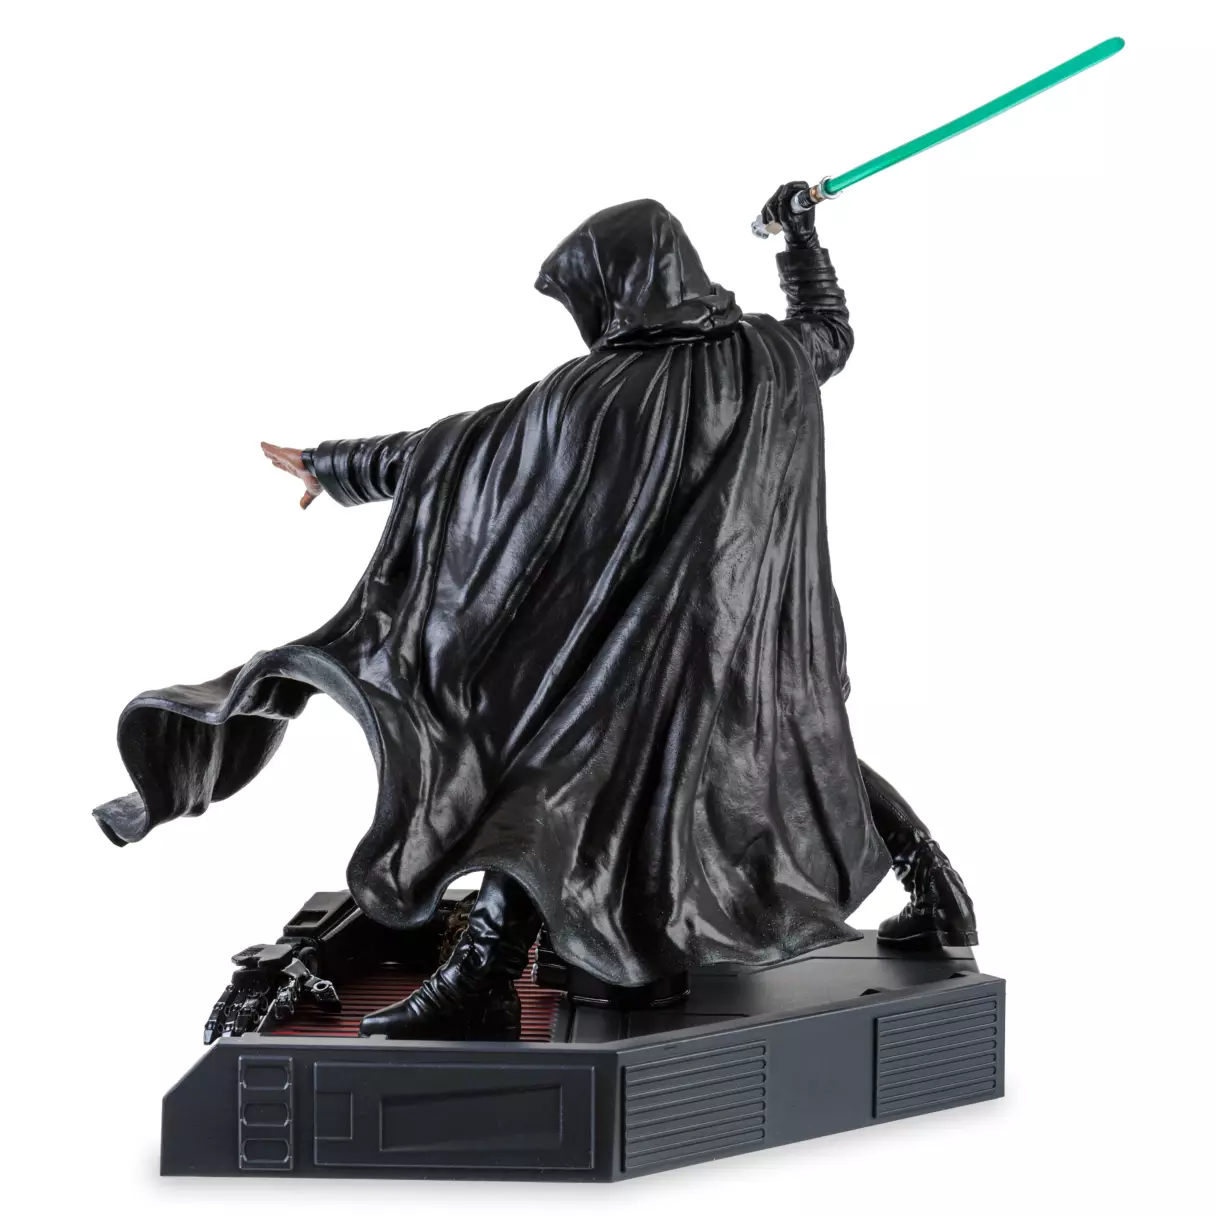 TM Luke Skywalker PVC Diorama Sculpture 3